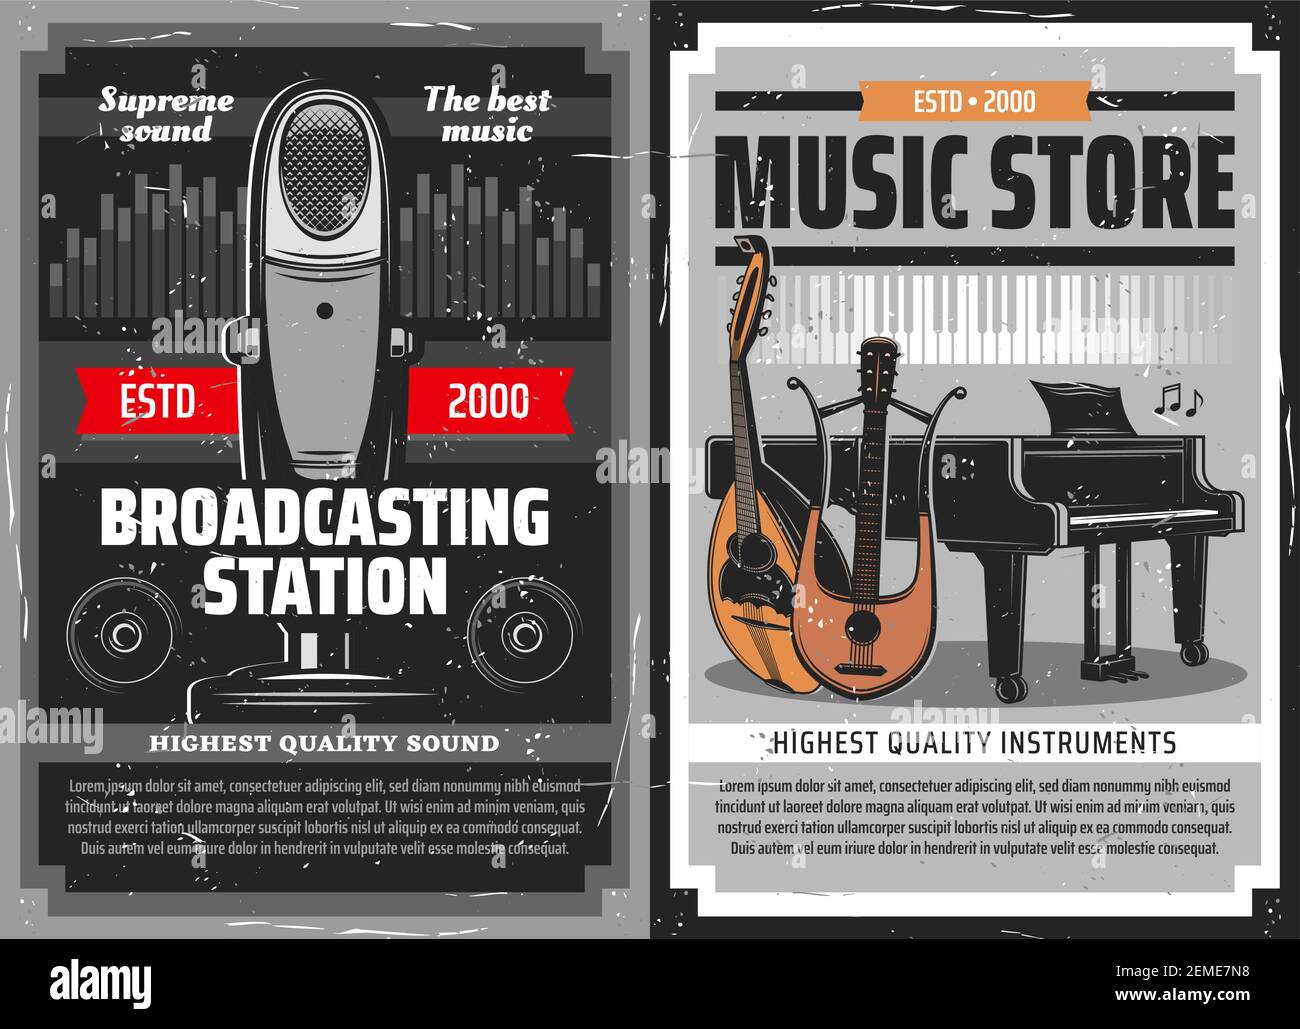 Radio Broadcast Poster, Musikinstrumente Speicher, Vektor Retro Mikrofon  und Klavier. Rundfunk und DJ-Radiosender Live-Musik FM Podcast, Klassik  Stock-Vektorgrafik - Alamy